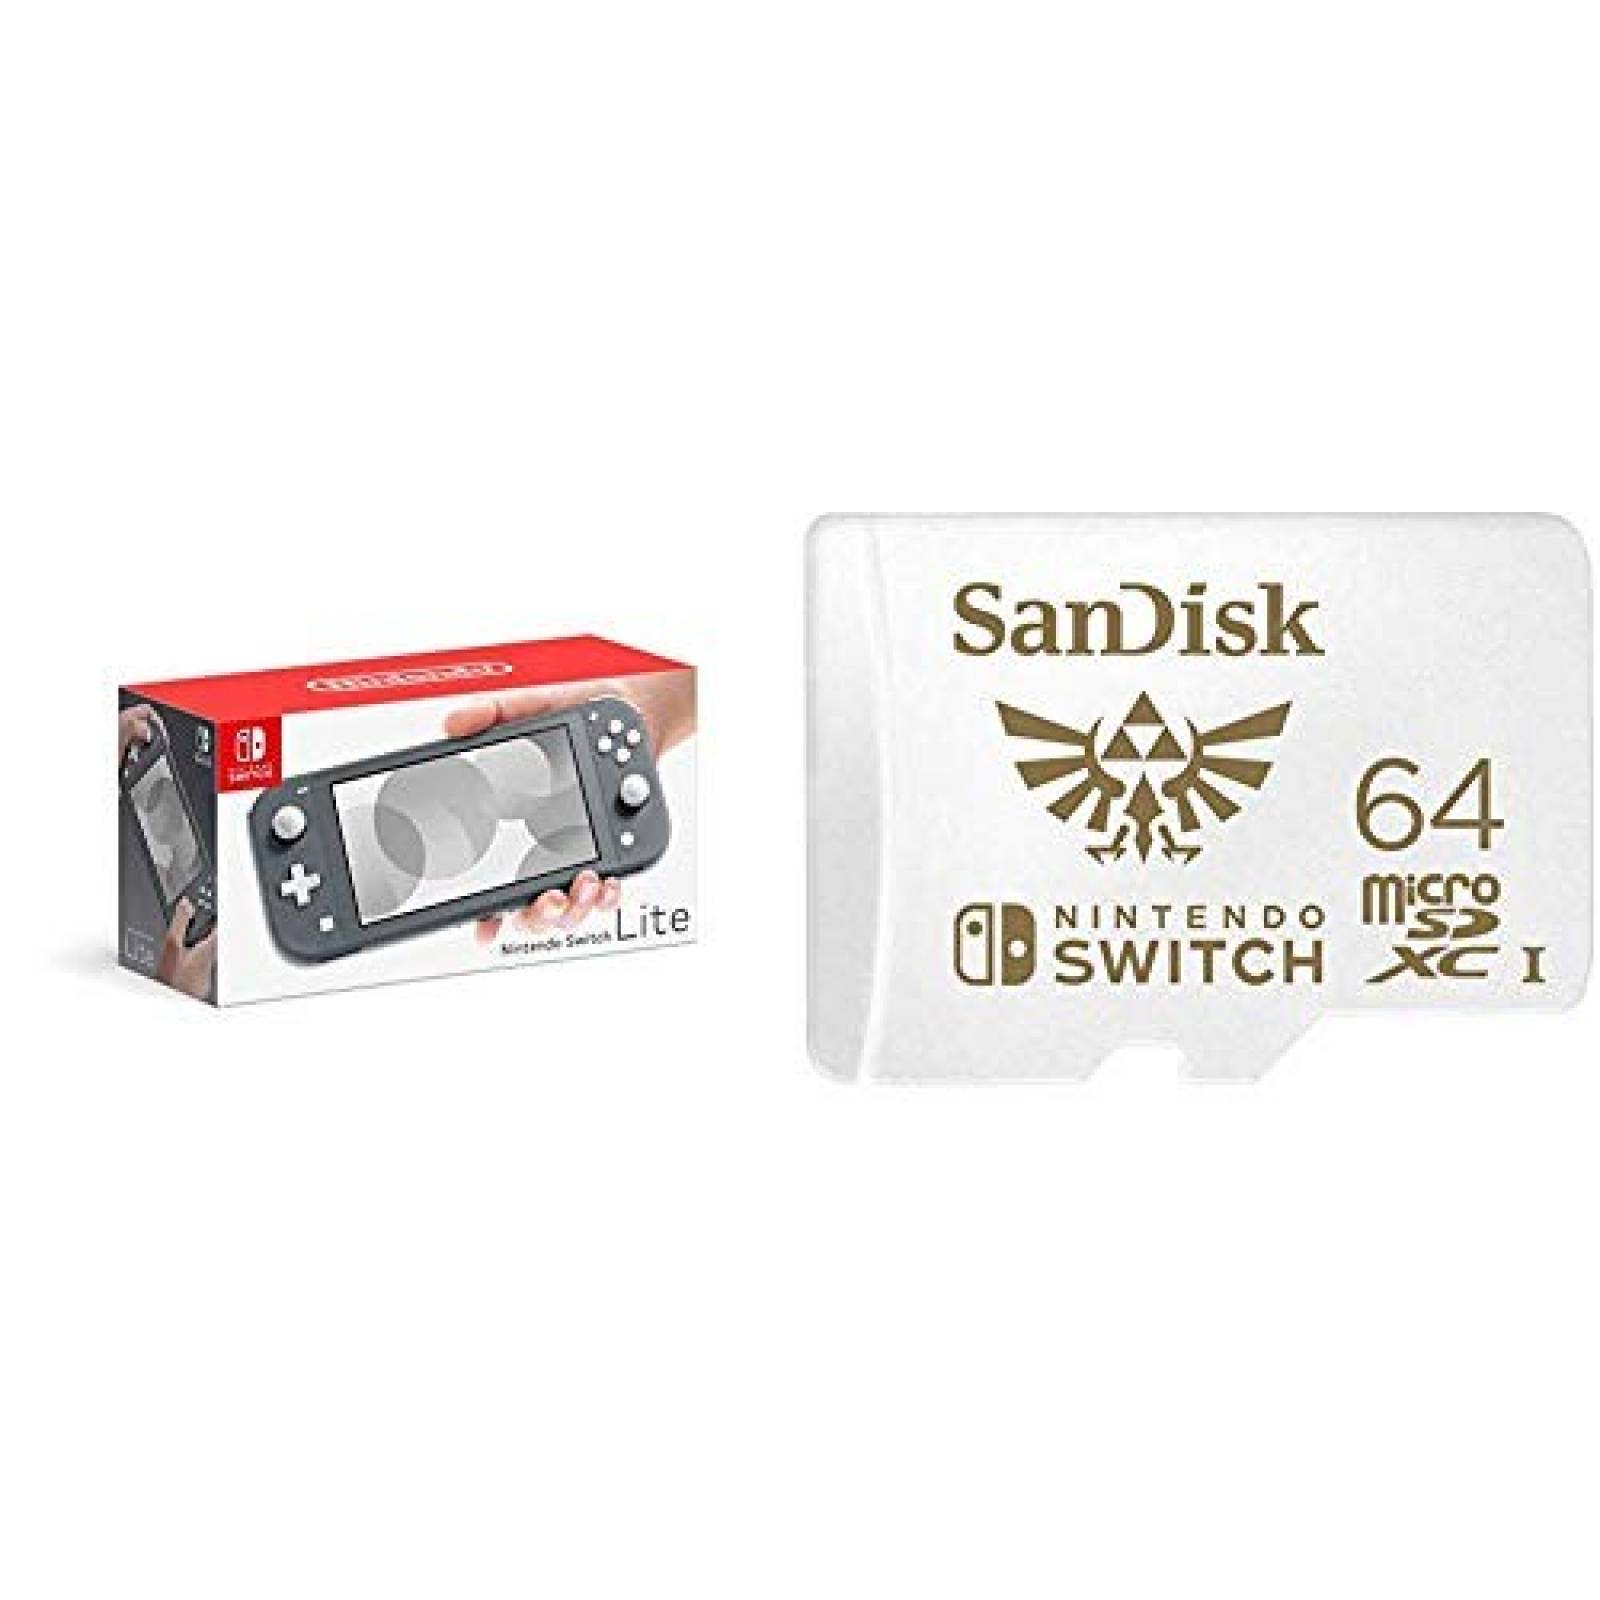 Consola Nintendo Switch Lite + memoria SanDisk 64GB -gris